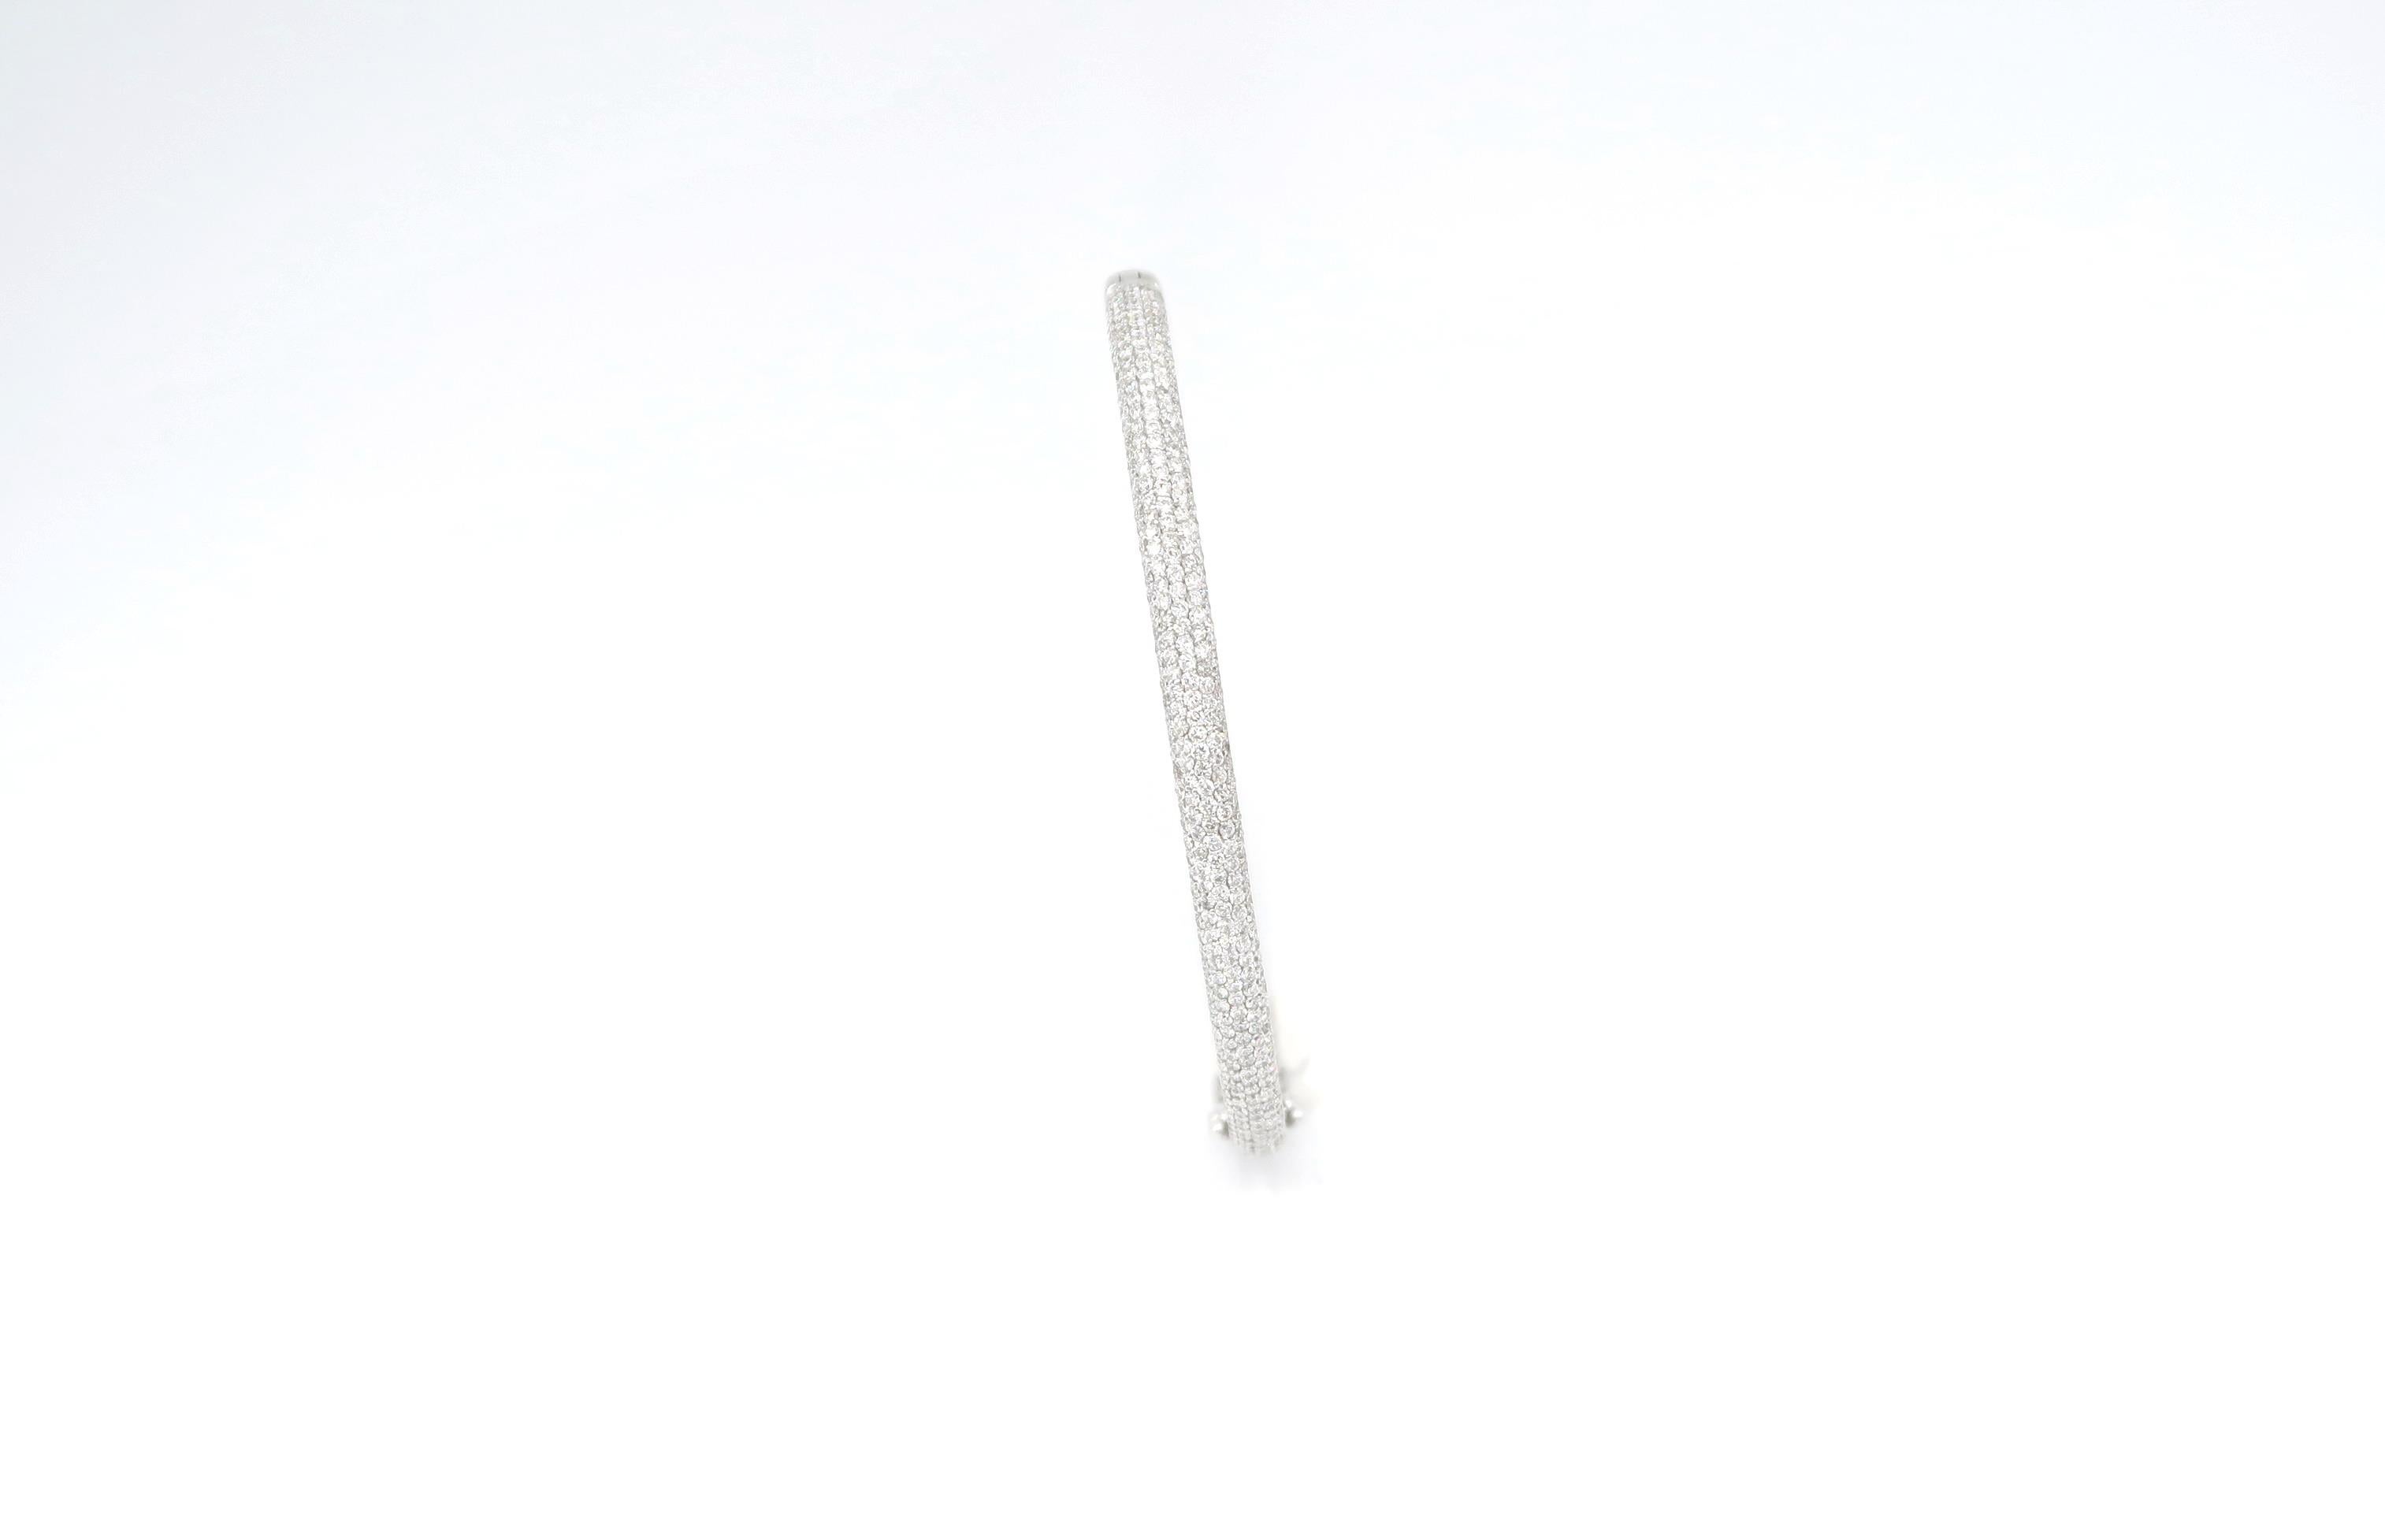 BOON 4.5mm Wide White Diamond Skinny Bangle in 18K White Gold 

Size : 18.5

Diamond : 2.88cts.
Gold : 18K White Gold 30.288g.
